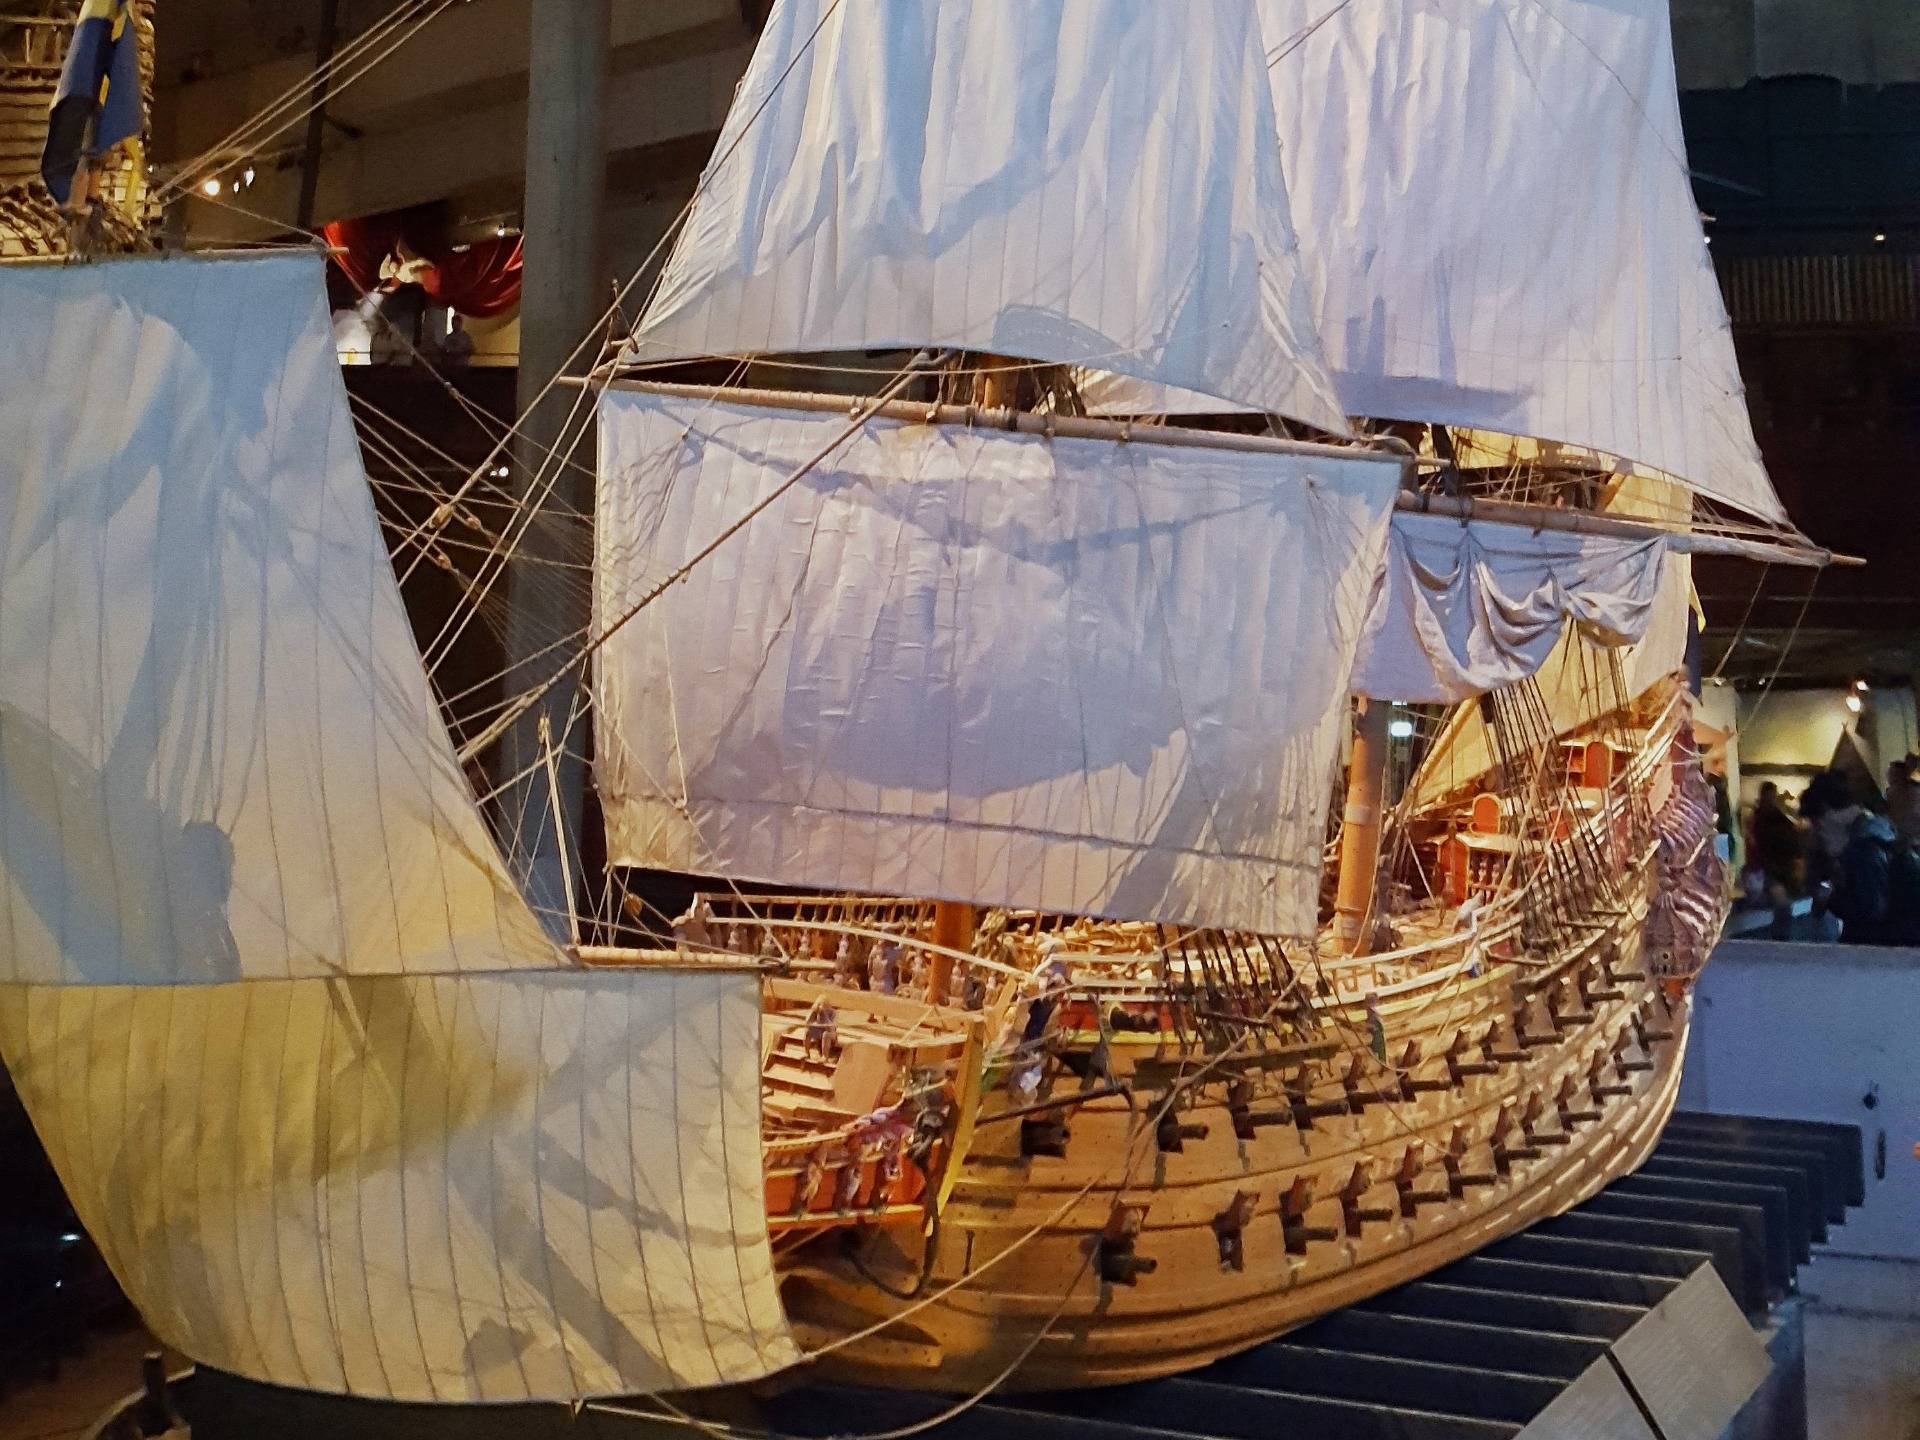 Fortunately, the Vasa still sank in the Baltic Sea

